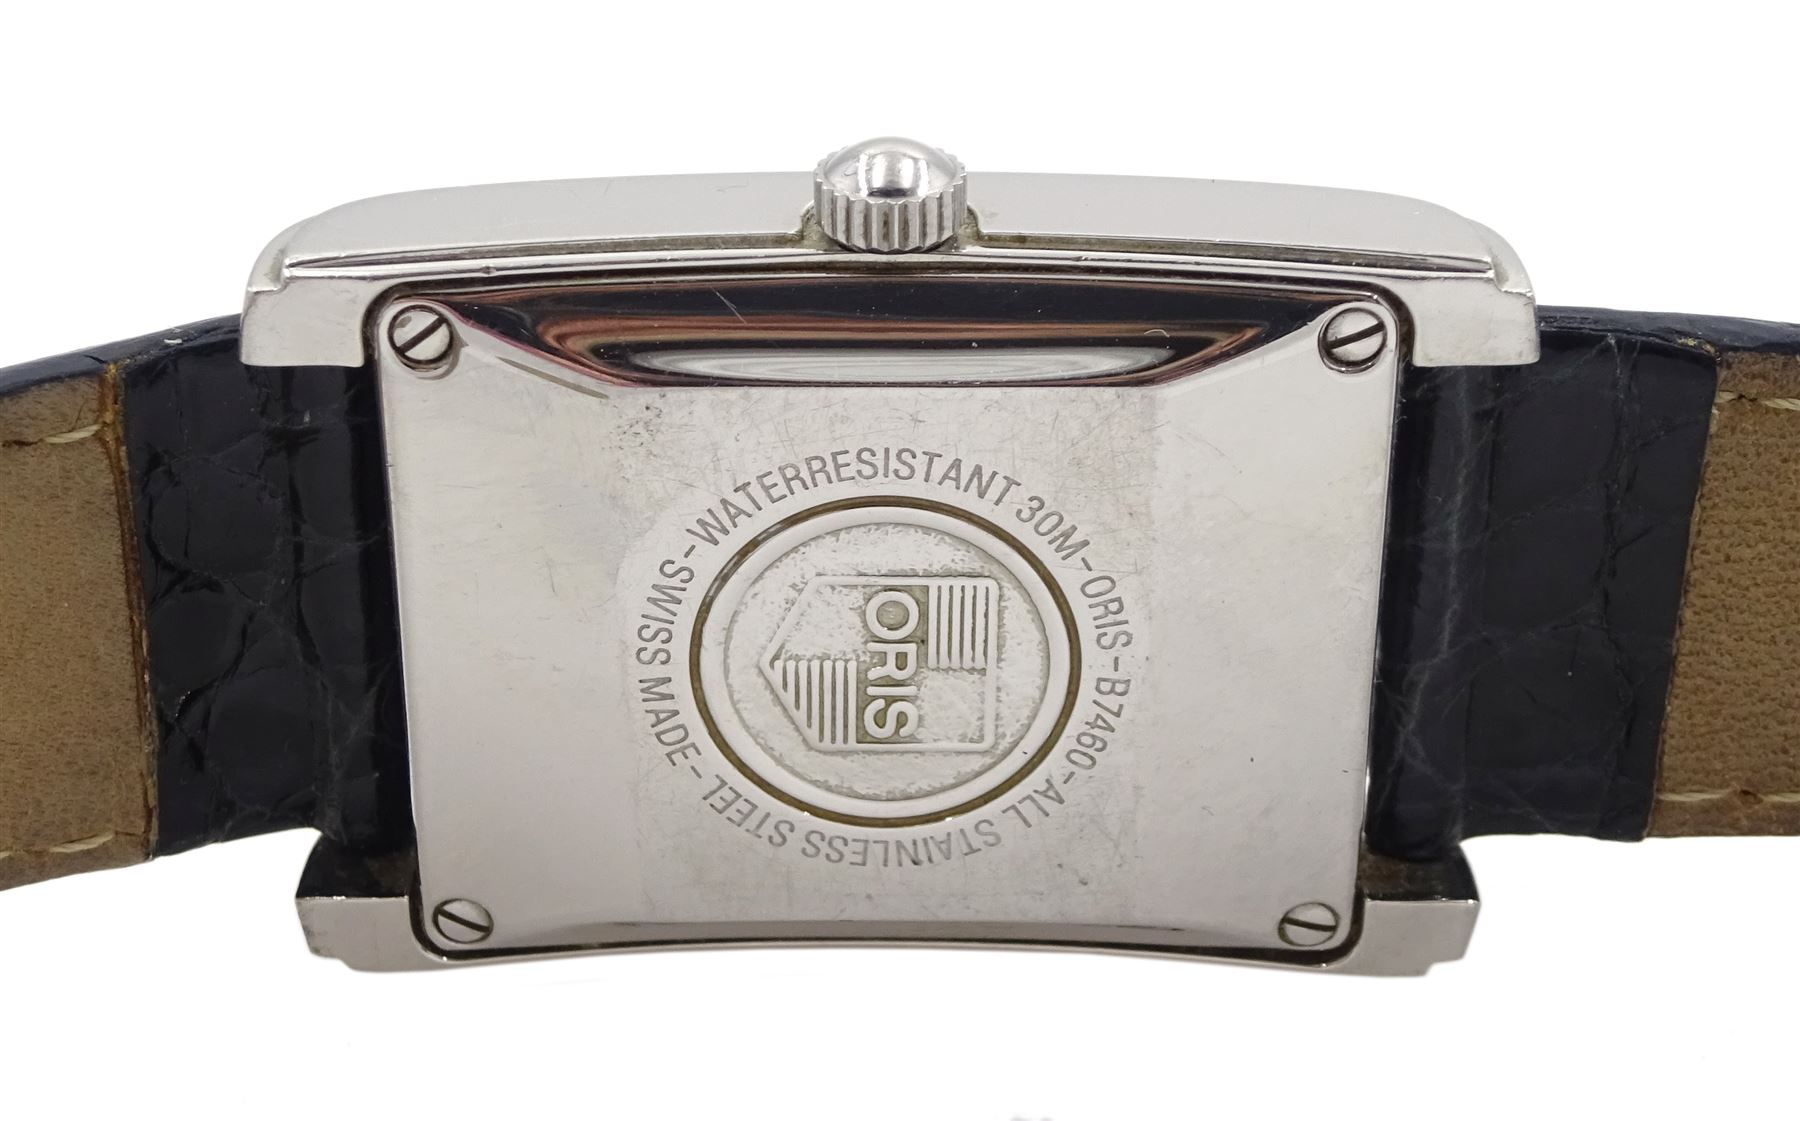 Oris gentleman's stainless steel automatic 25 jewels calendar wristwatch - Image 2 of 2